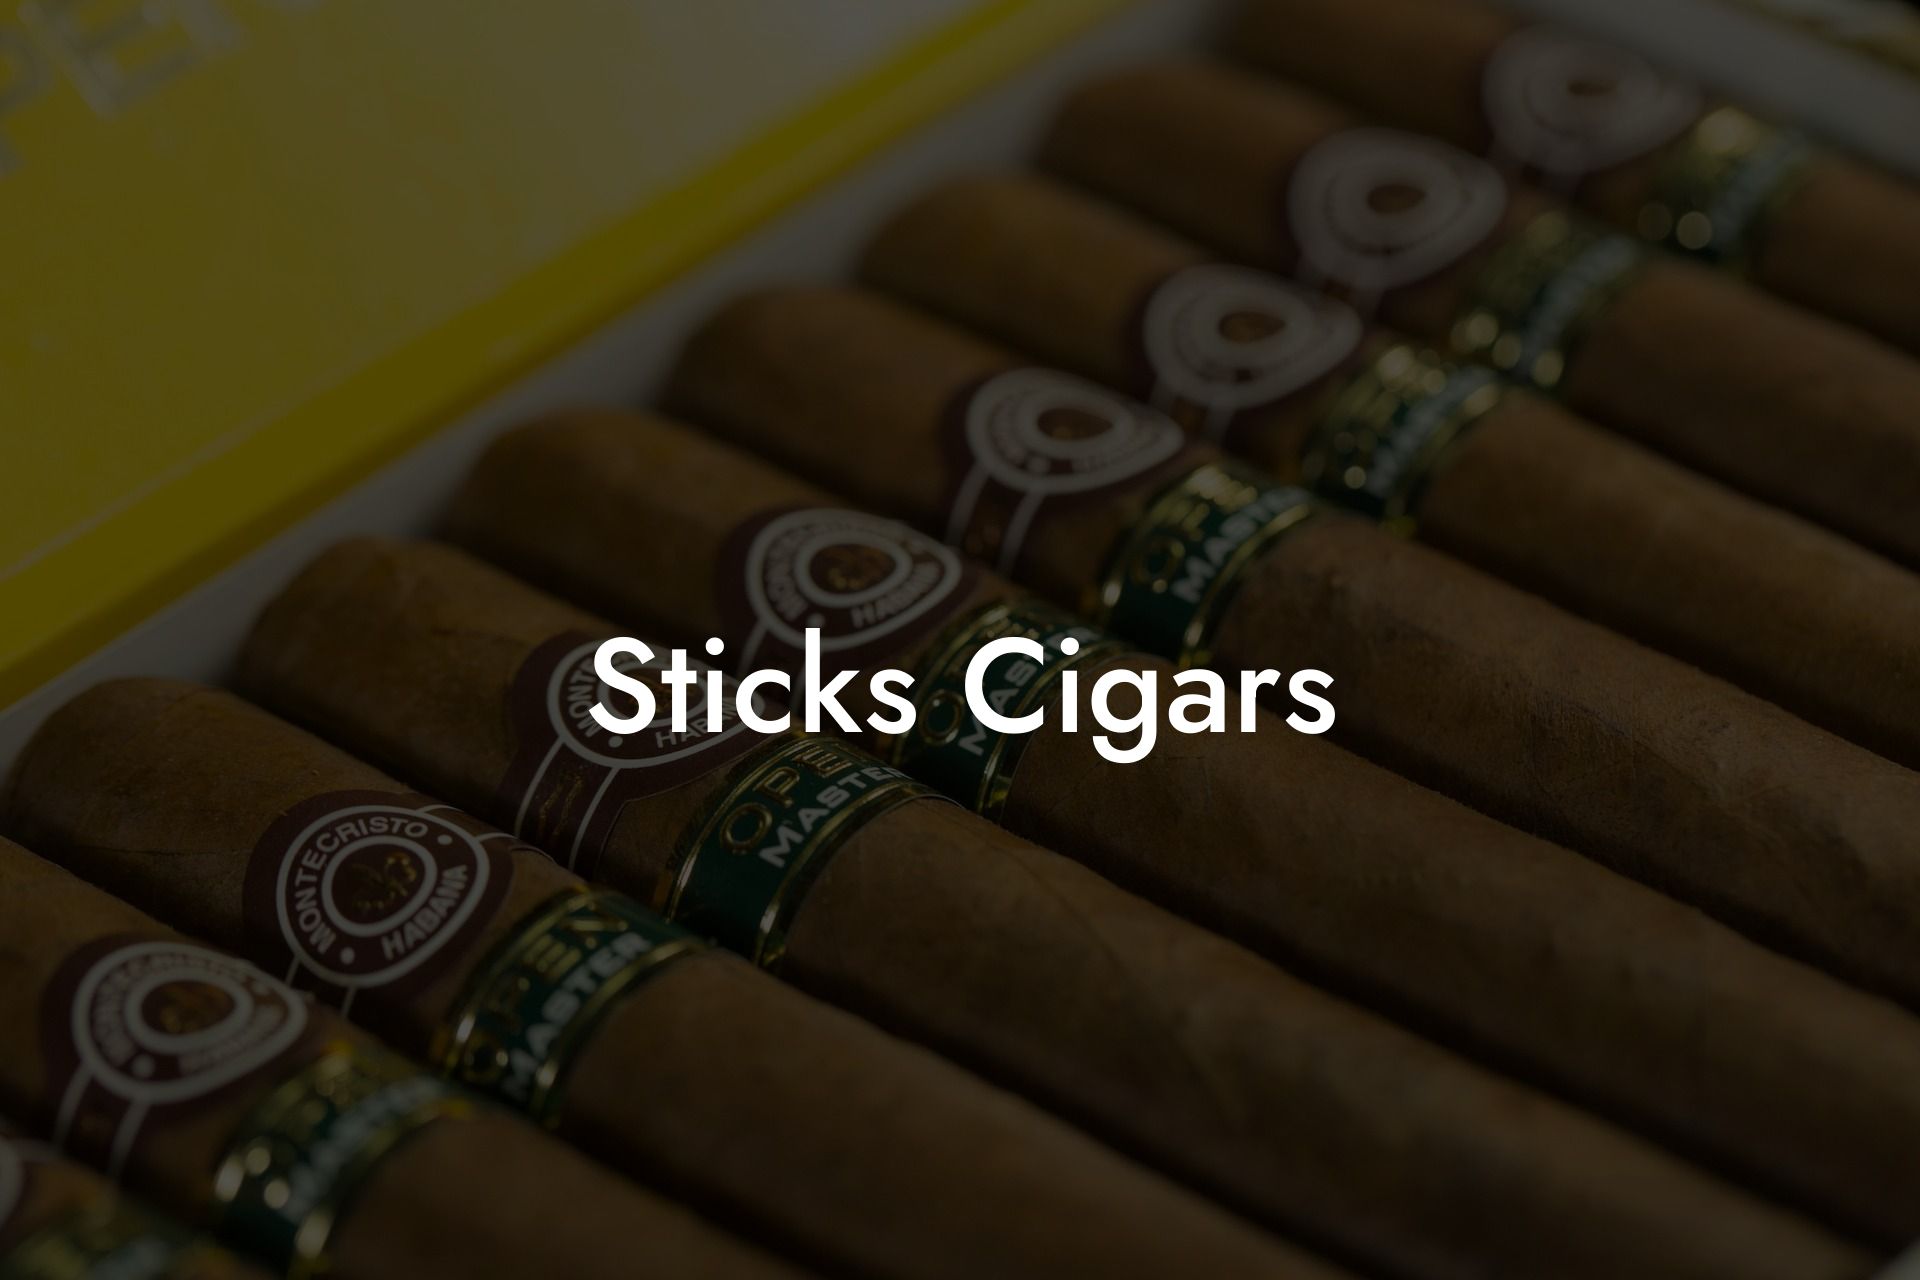 Sticks Cigars